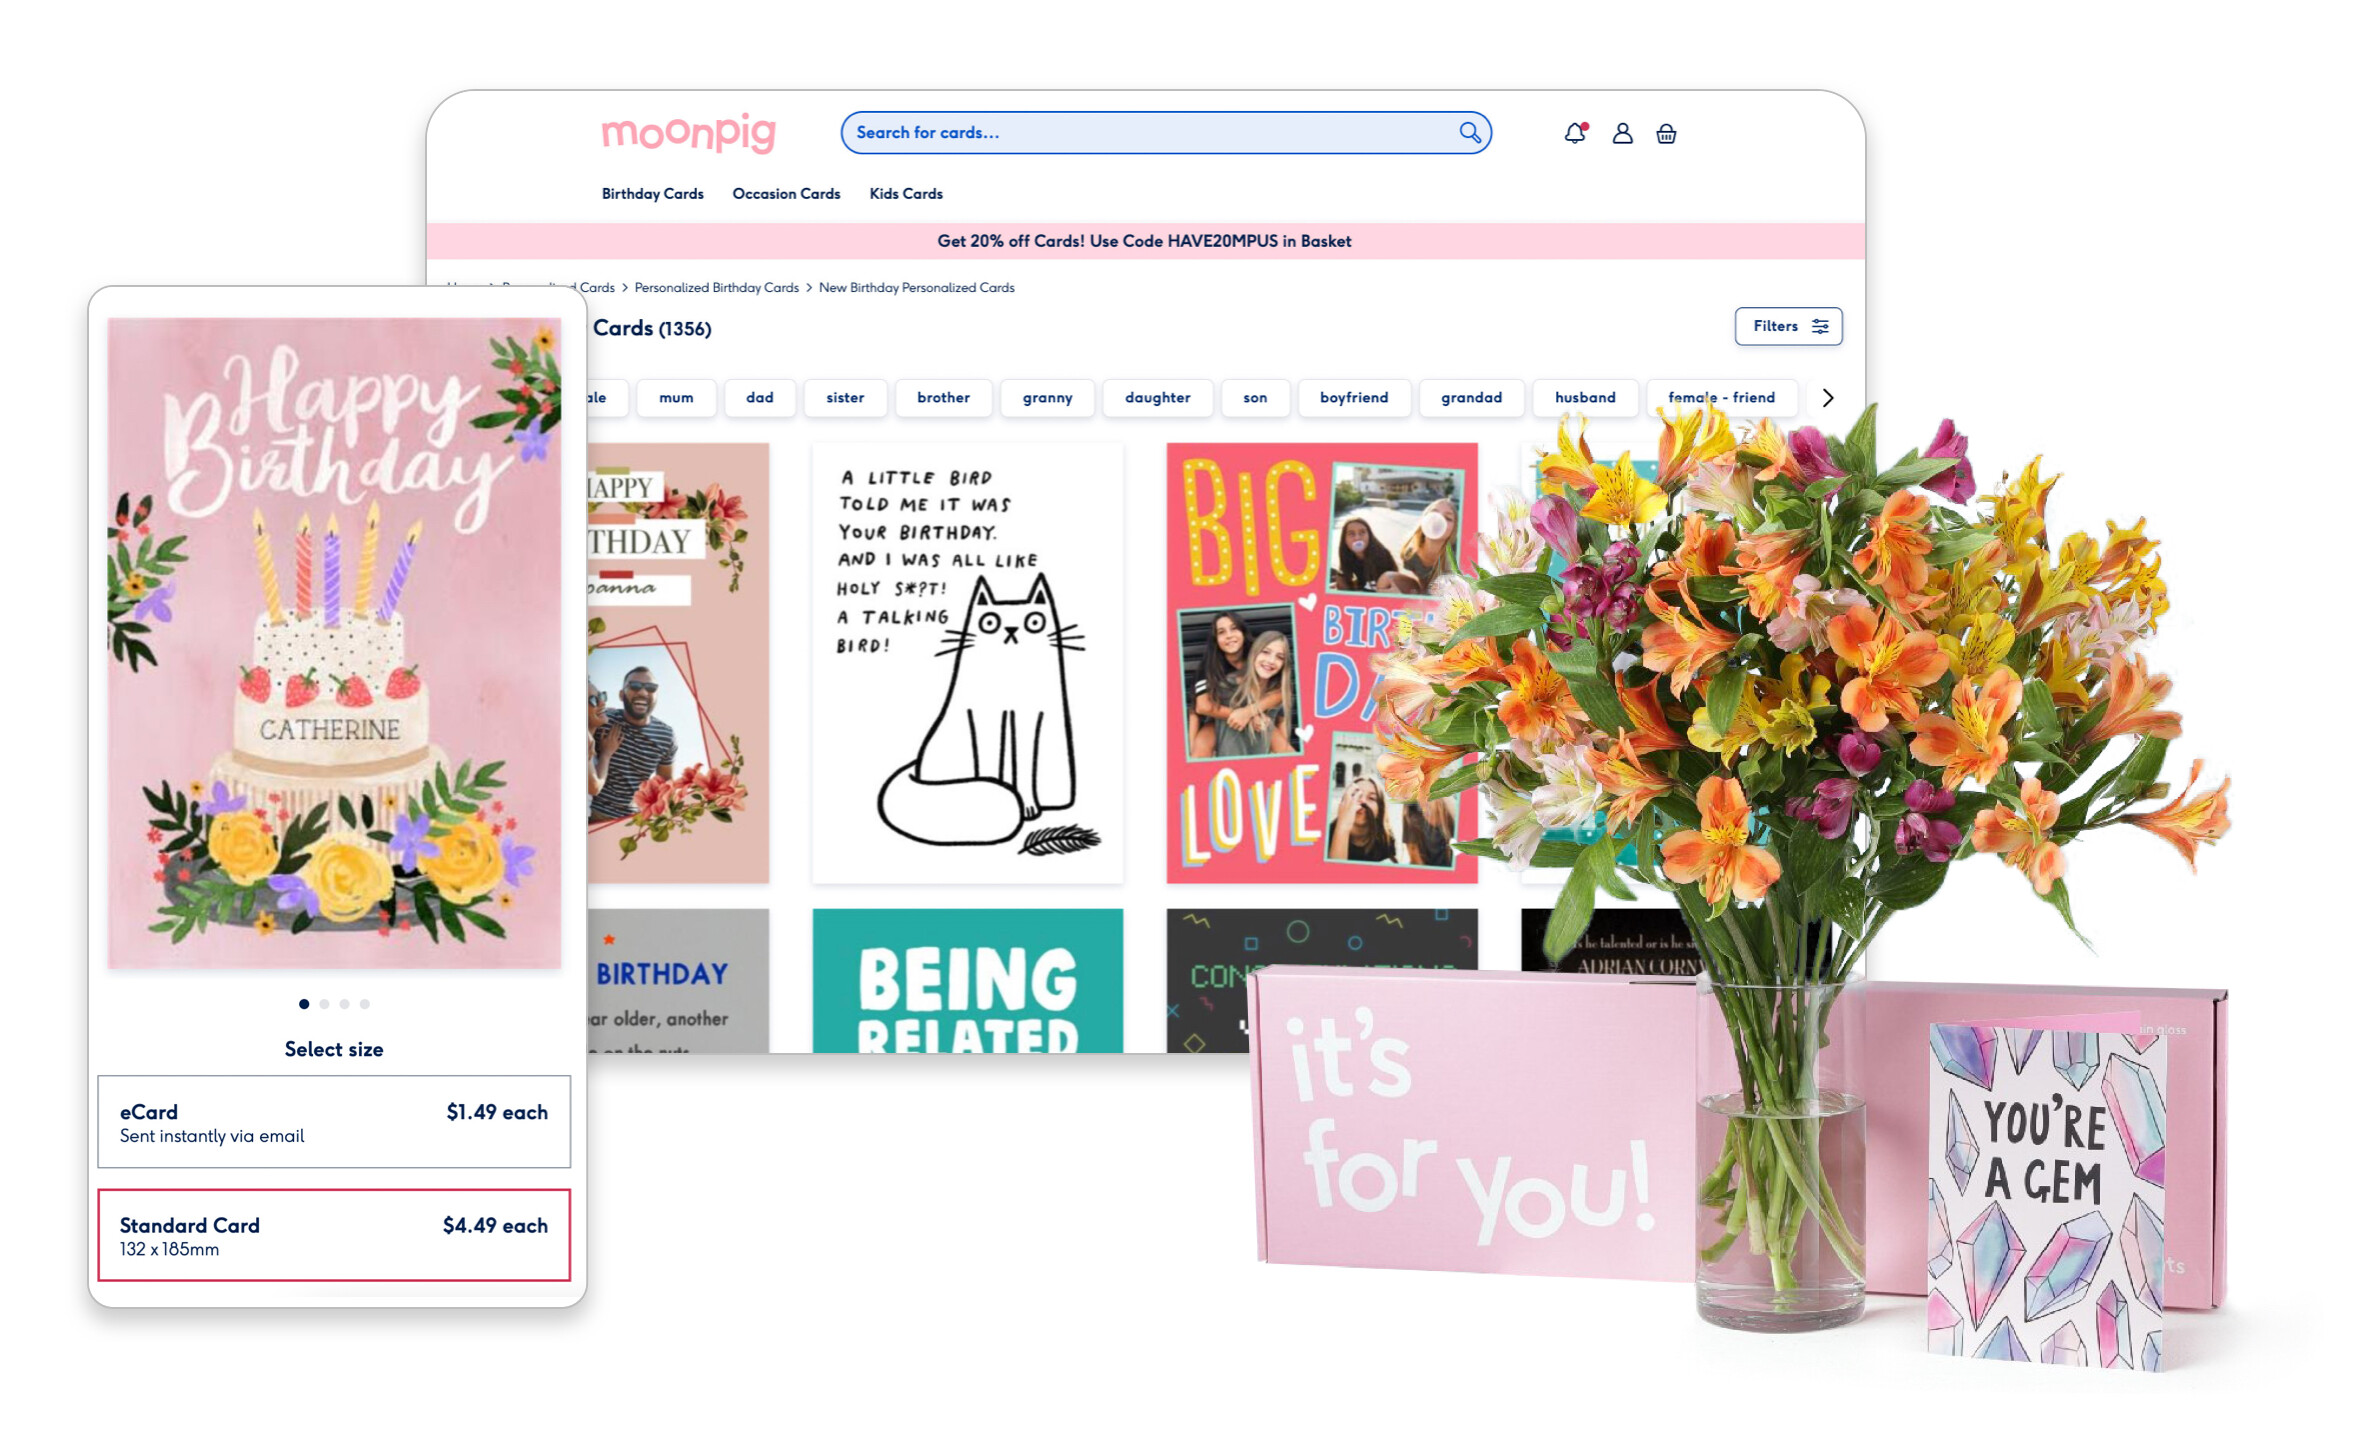 Moonpig's new digital commerce platform offers unique shopping experiences